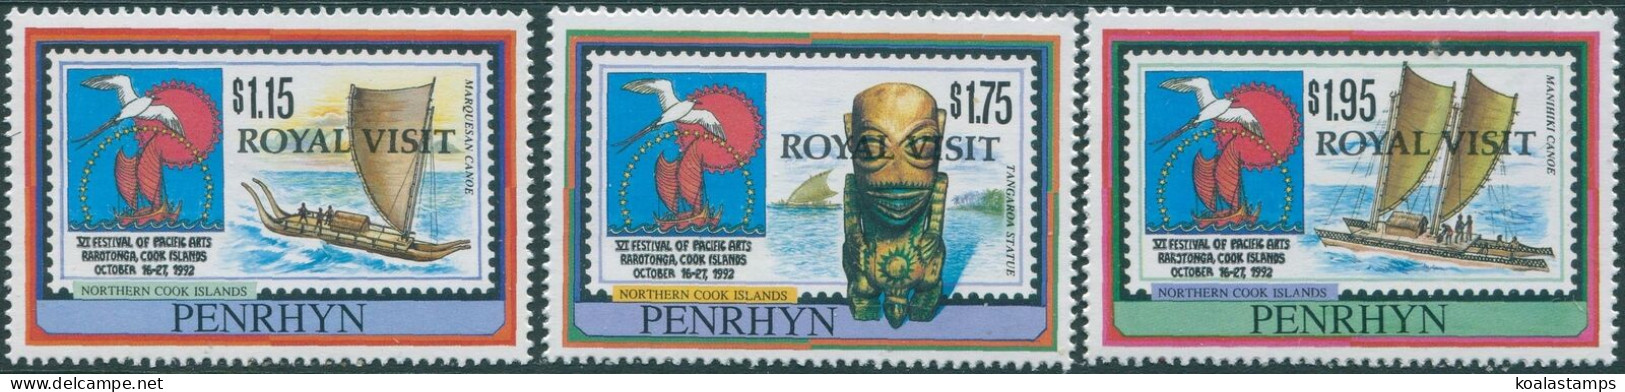 Cook Islands Penrhyn 1992 SG469-471 Royal Visit By Prince Edward Set MNH - Penrhyn